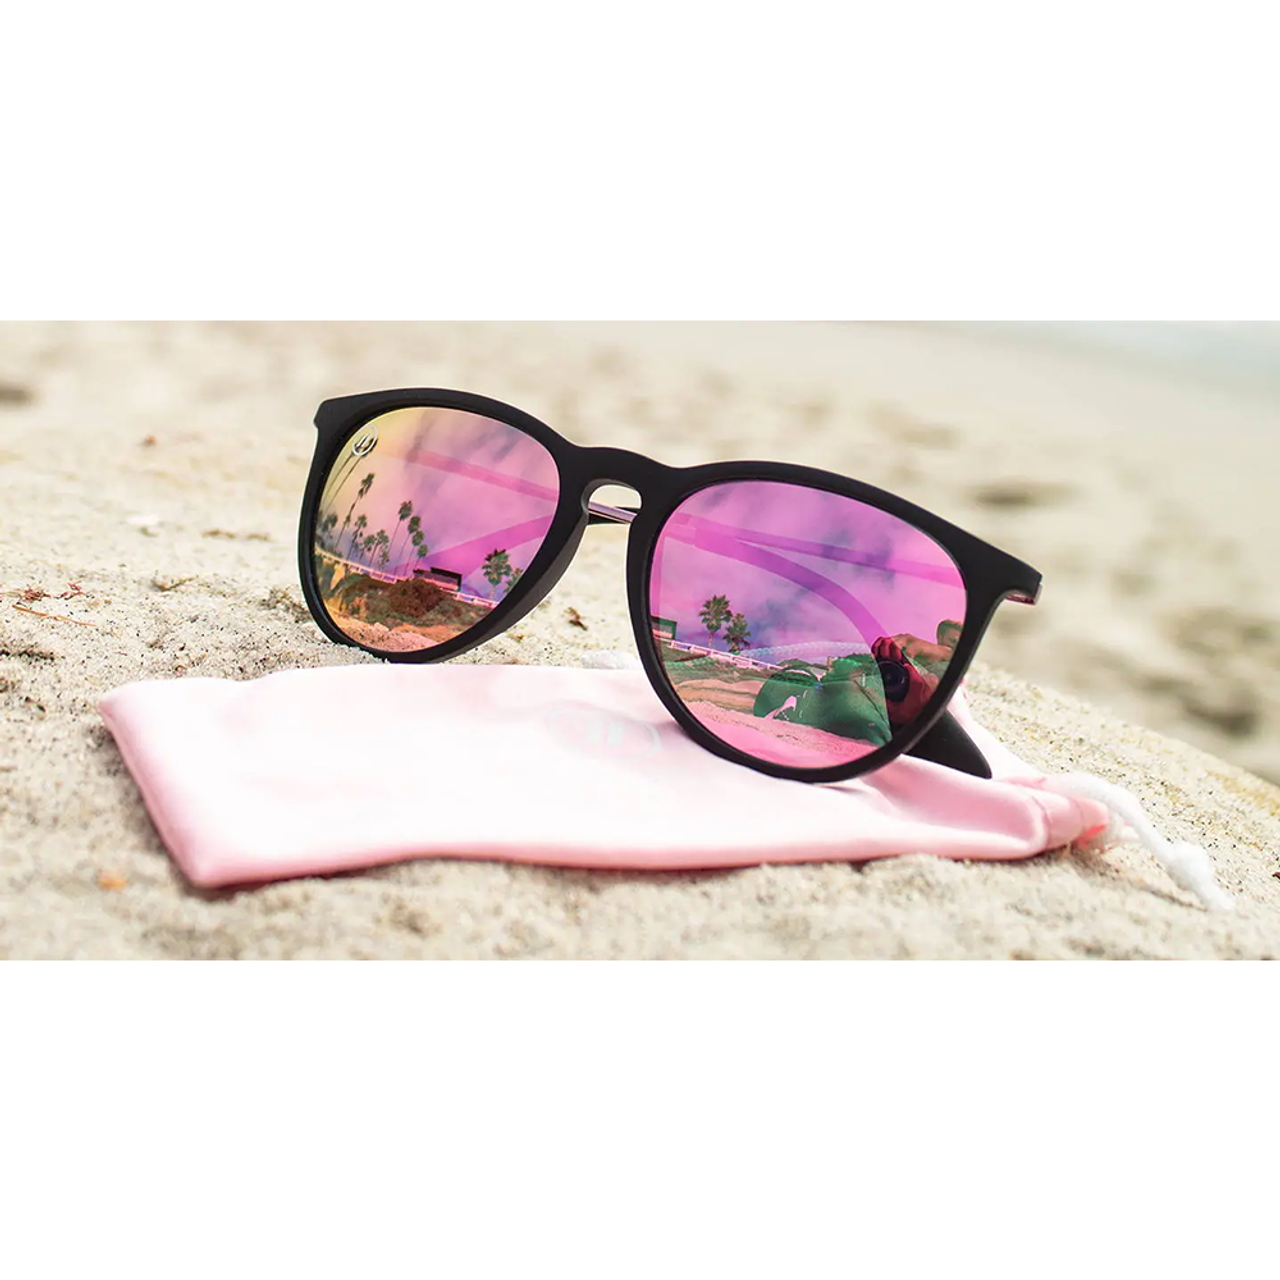 Blenders North Park Rosemary Beach Polarized Sunglasses